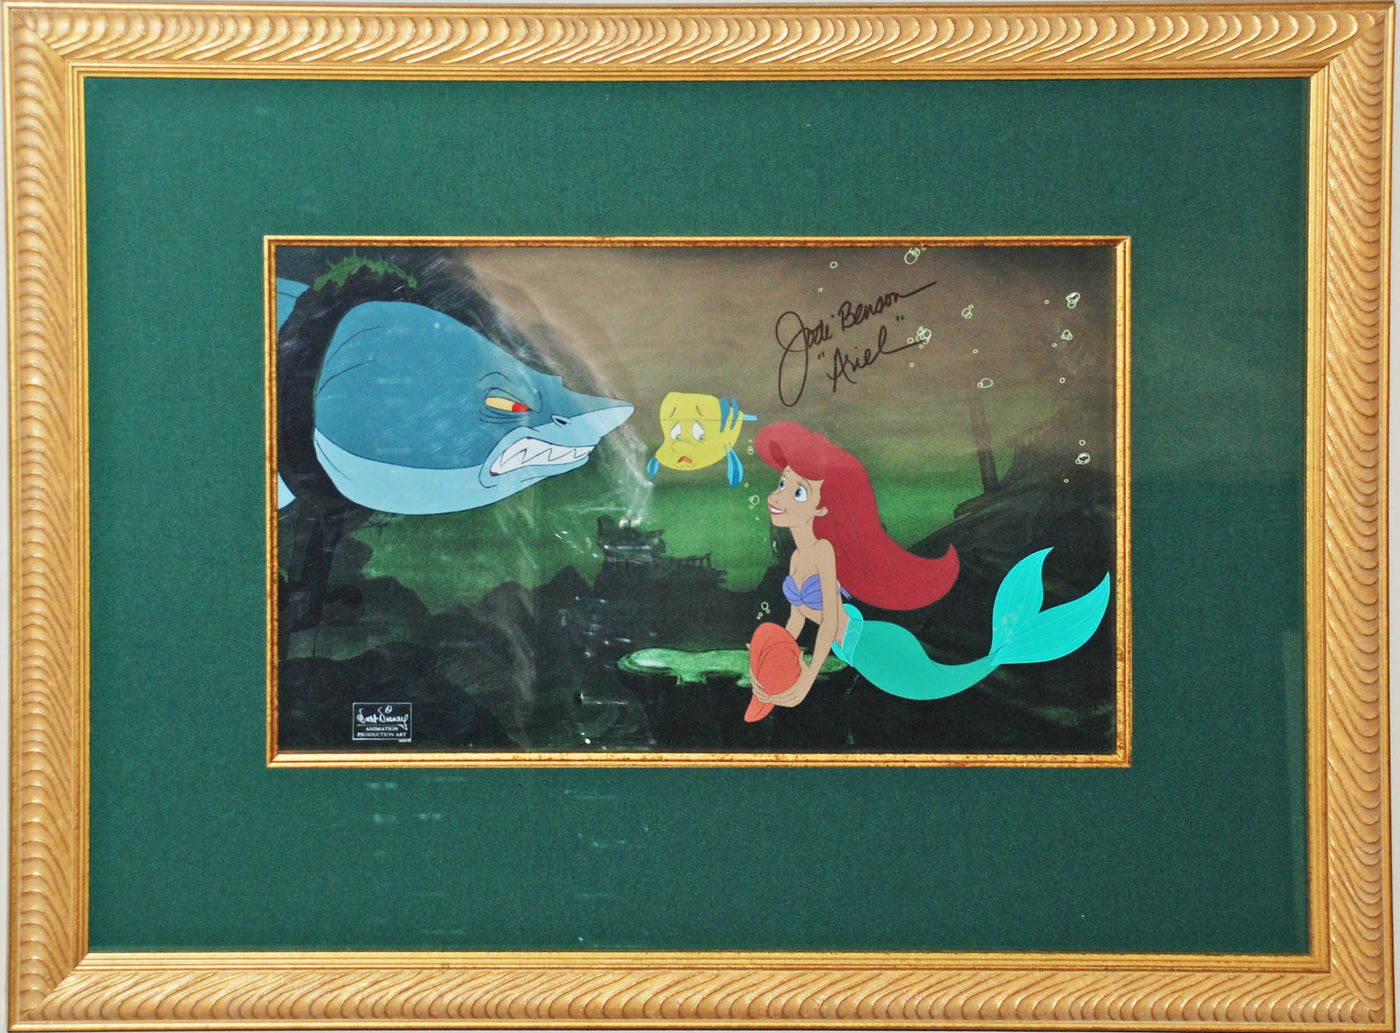 Original Walt Disney Production Cel From The Little Mermaid, Signed by Jodi Benson